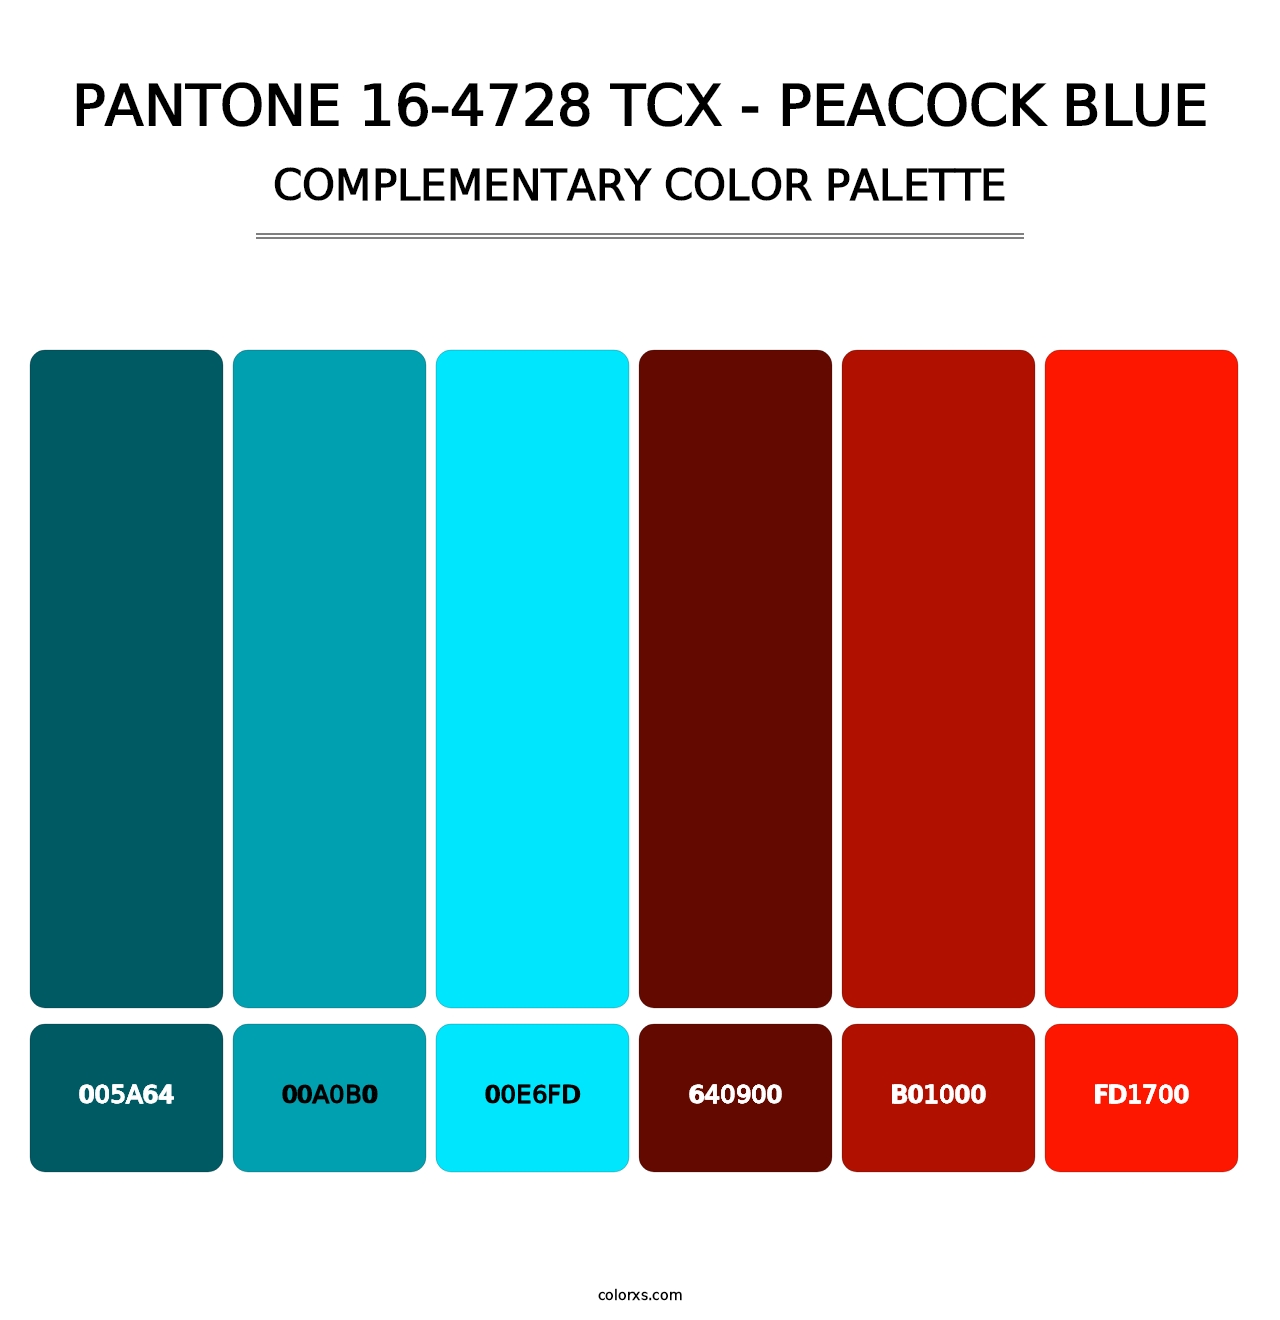 PANTONE 16-4728 TCX - Peacock Blue - Complementary Color Palette